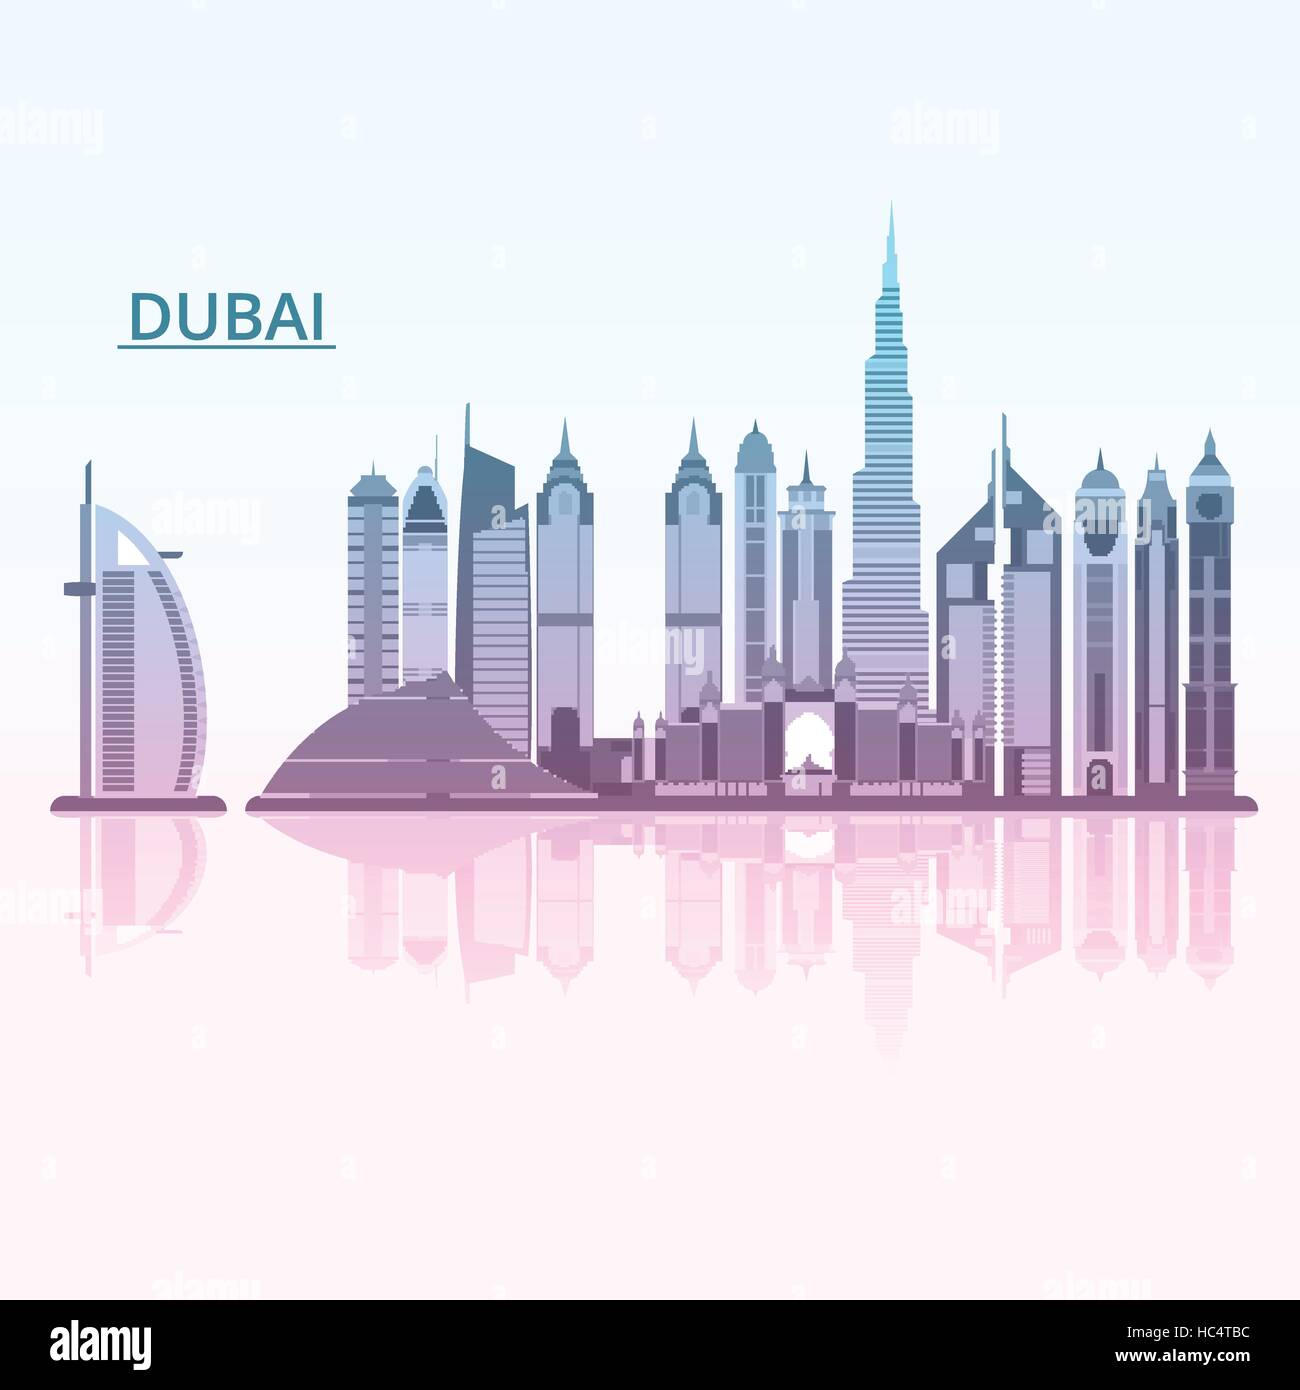 Vektor-Illustration von Dubai city Stock Vektor